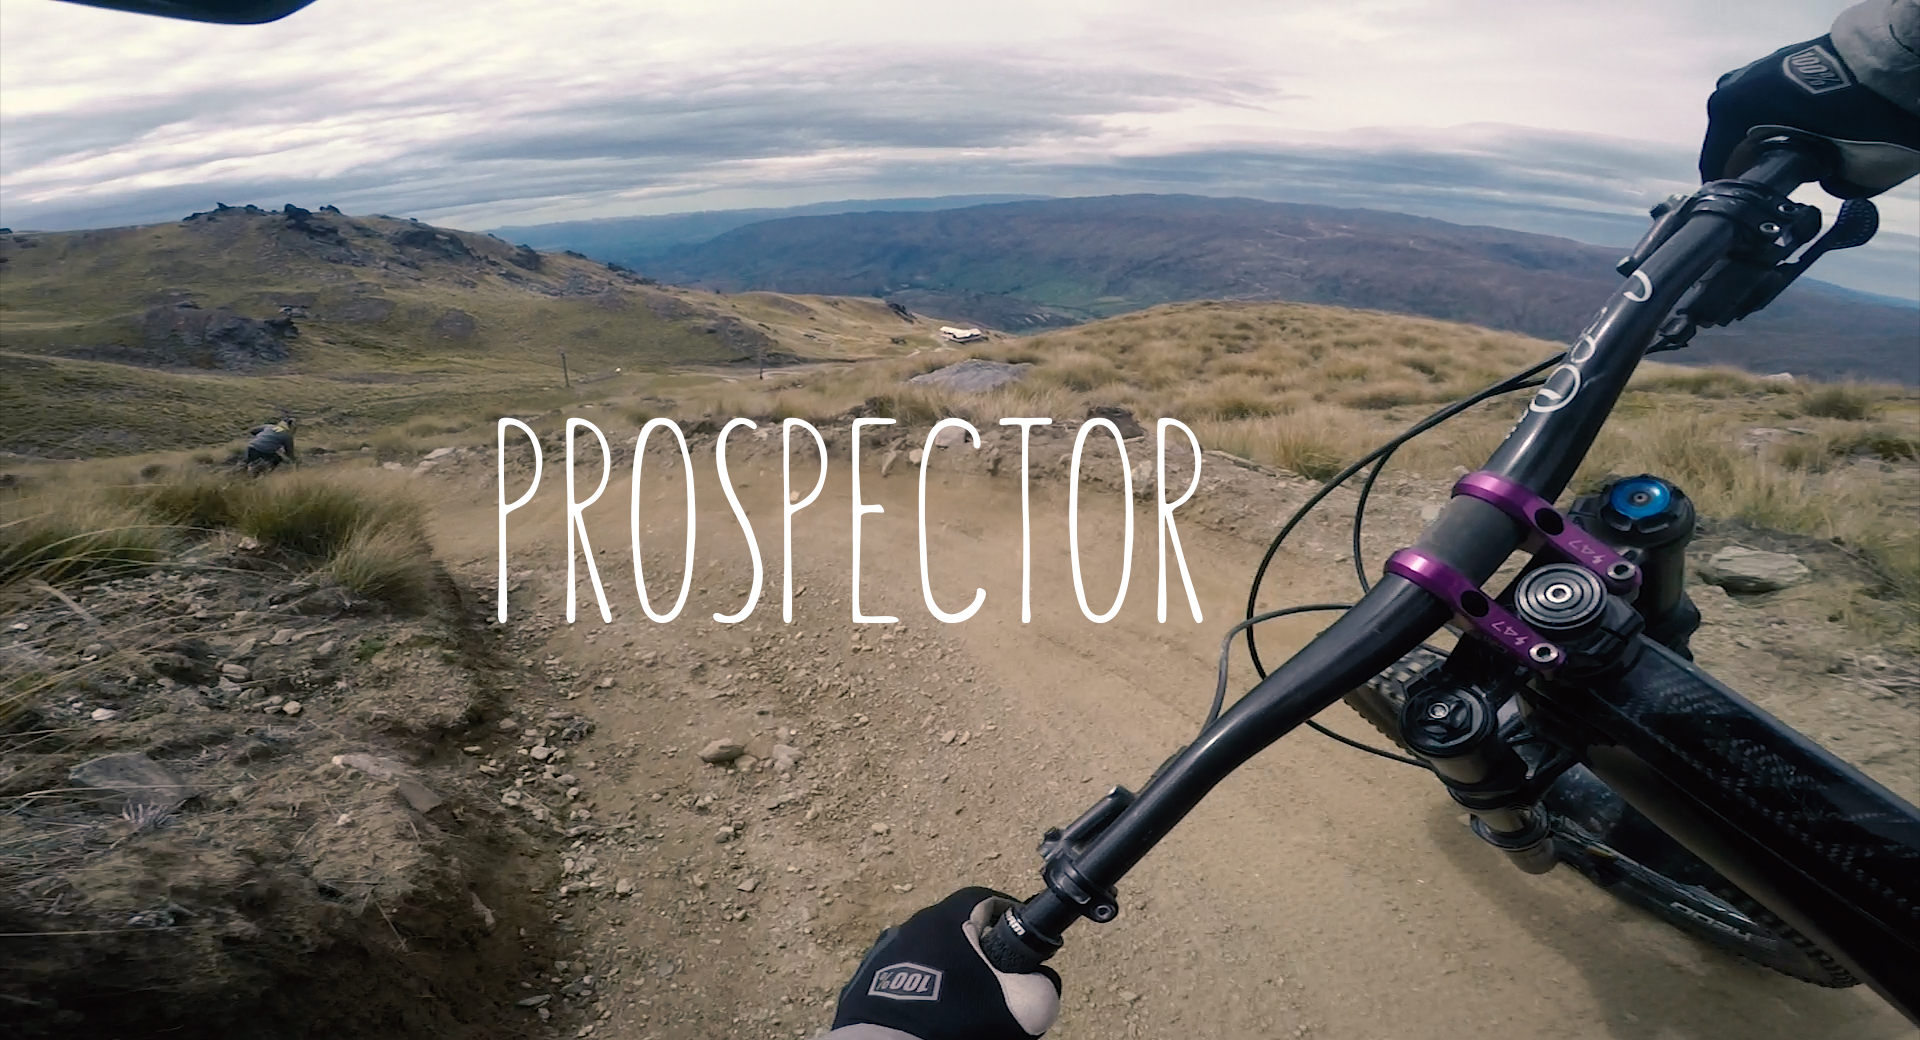 Prospector – Cardrona Bike Park – New Zealand